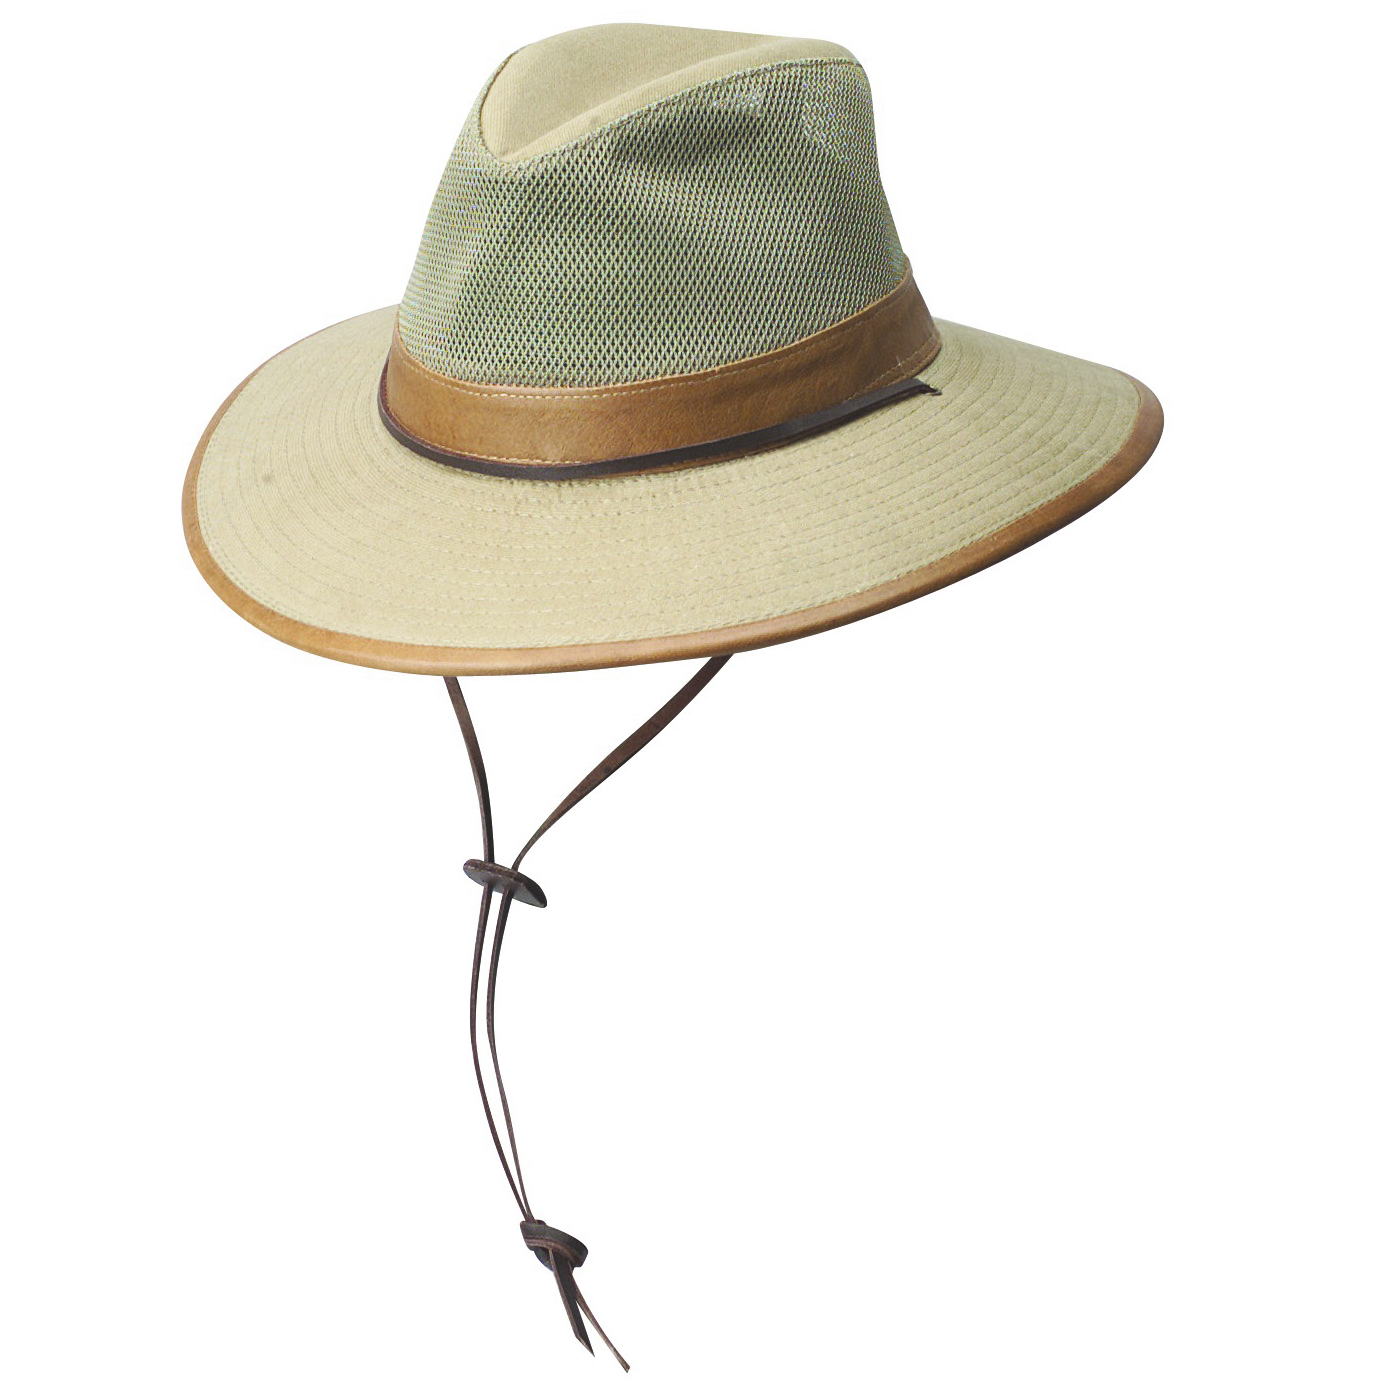 safari hat clipart - photo #42